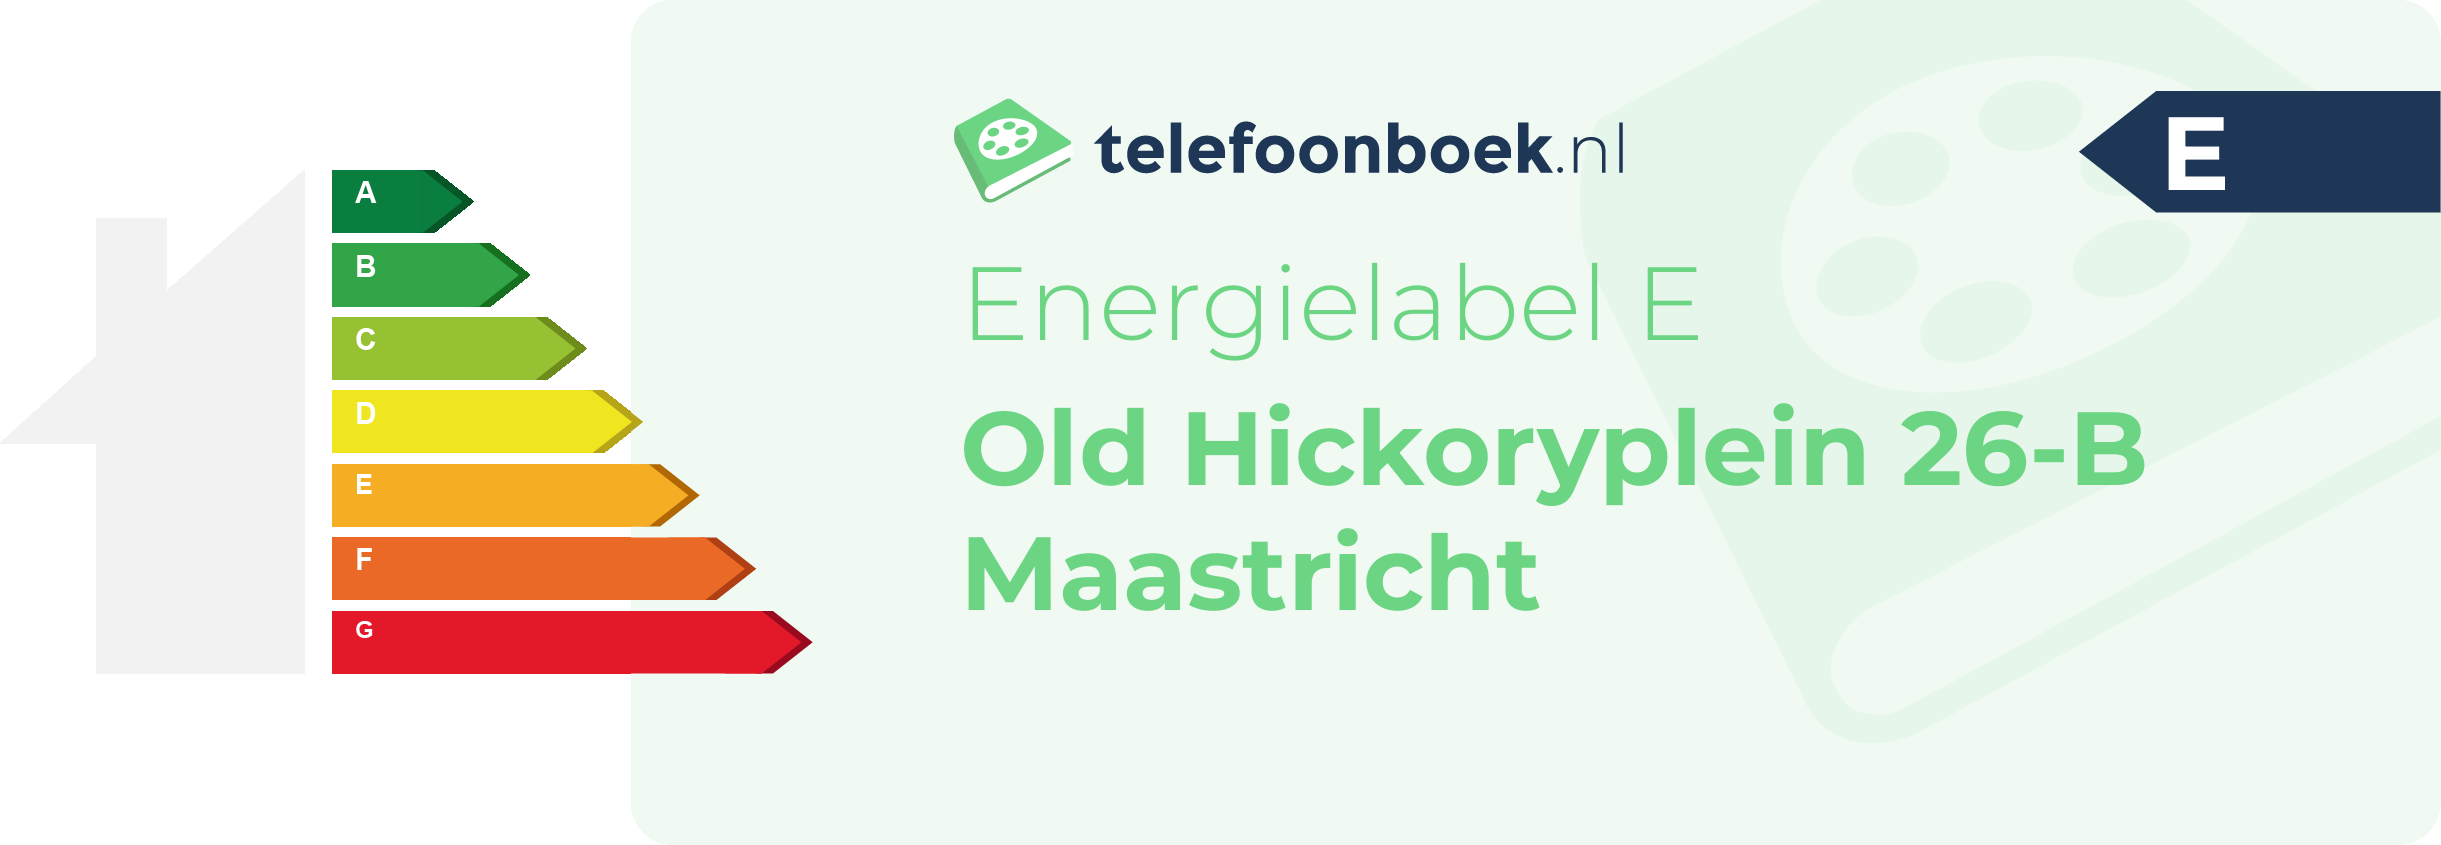 Energielabel Old Hickoryplein 26-B Maastricht